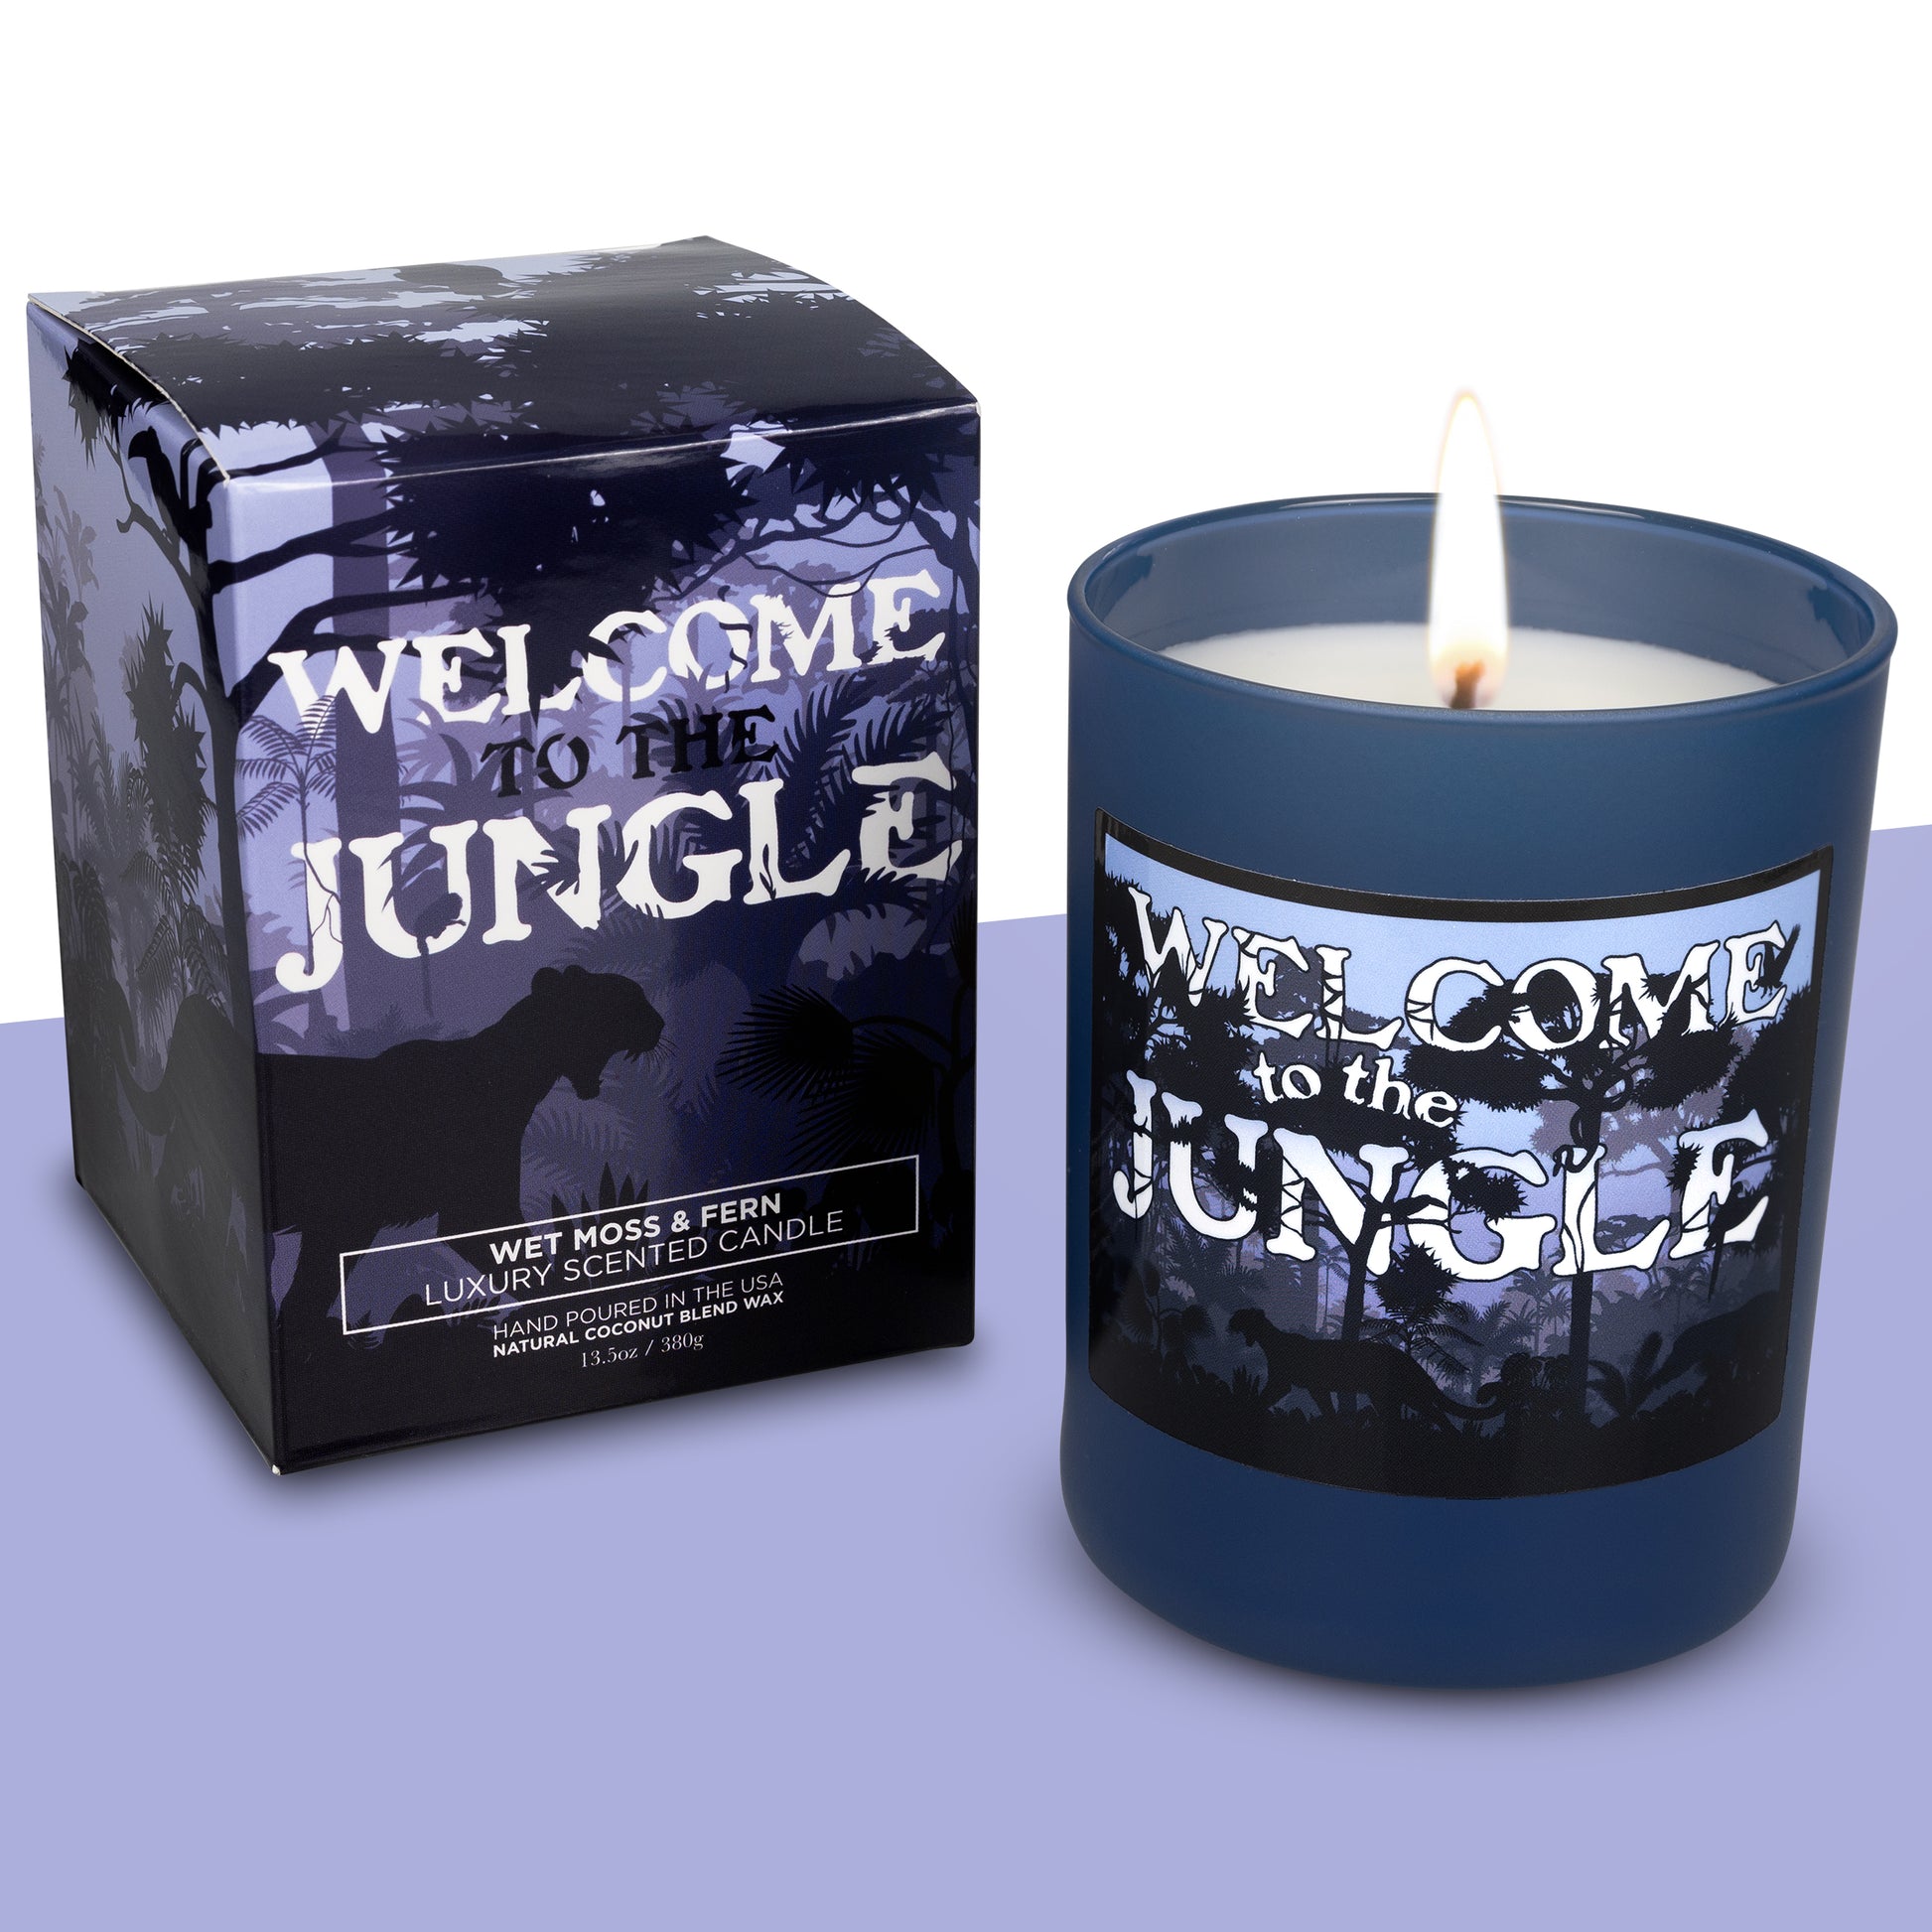 Welcome to the Jungle - Evoke Candle Co